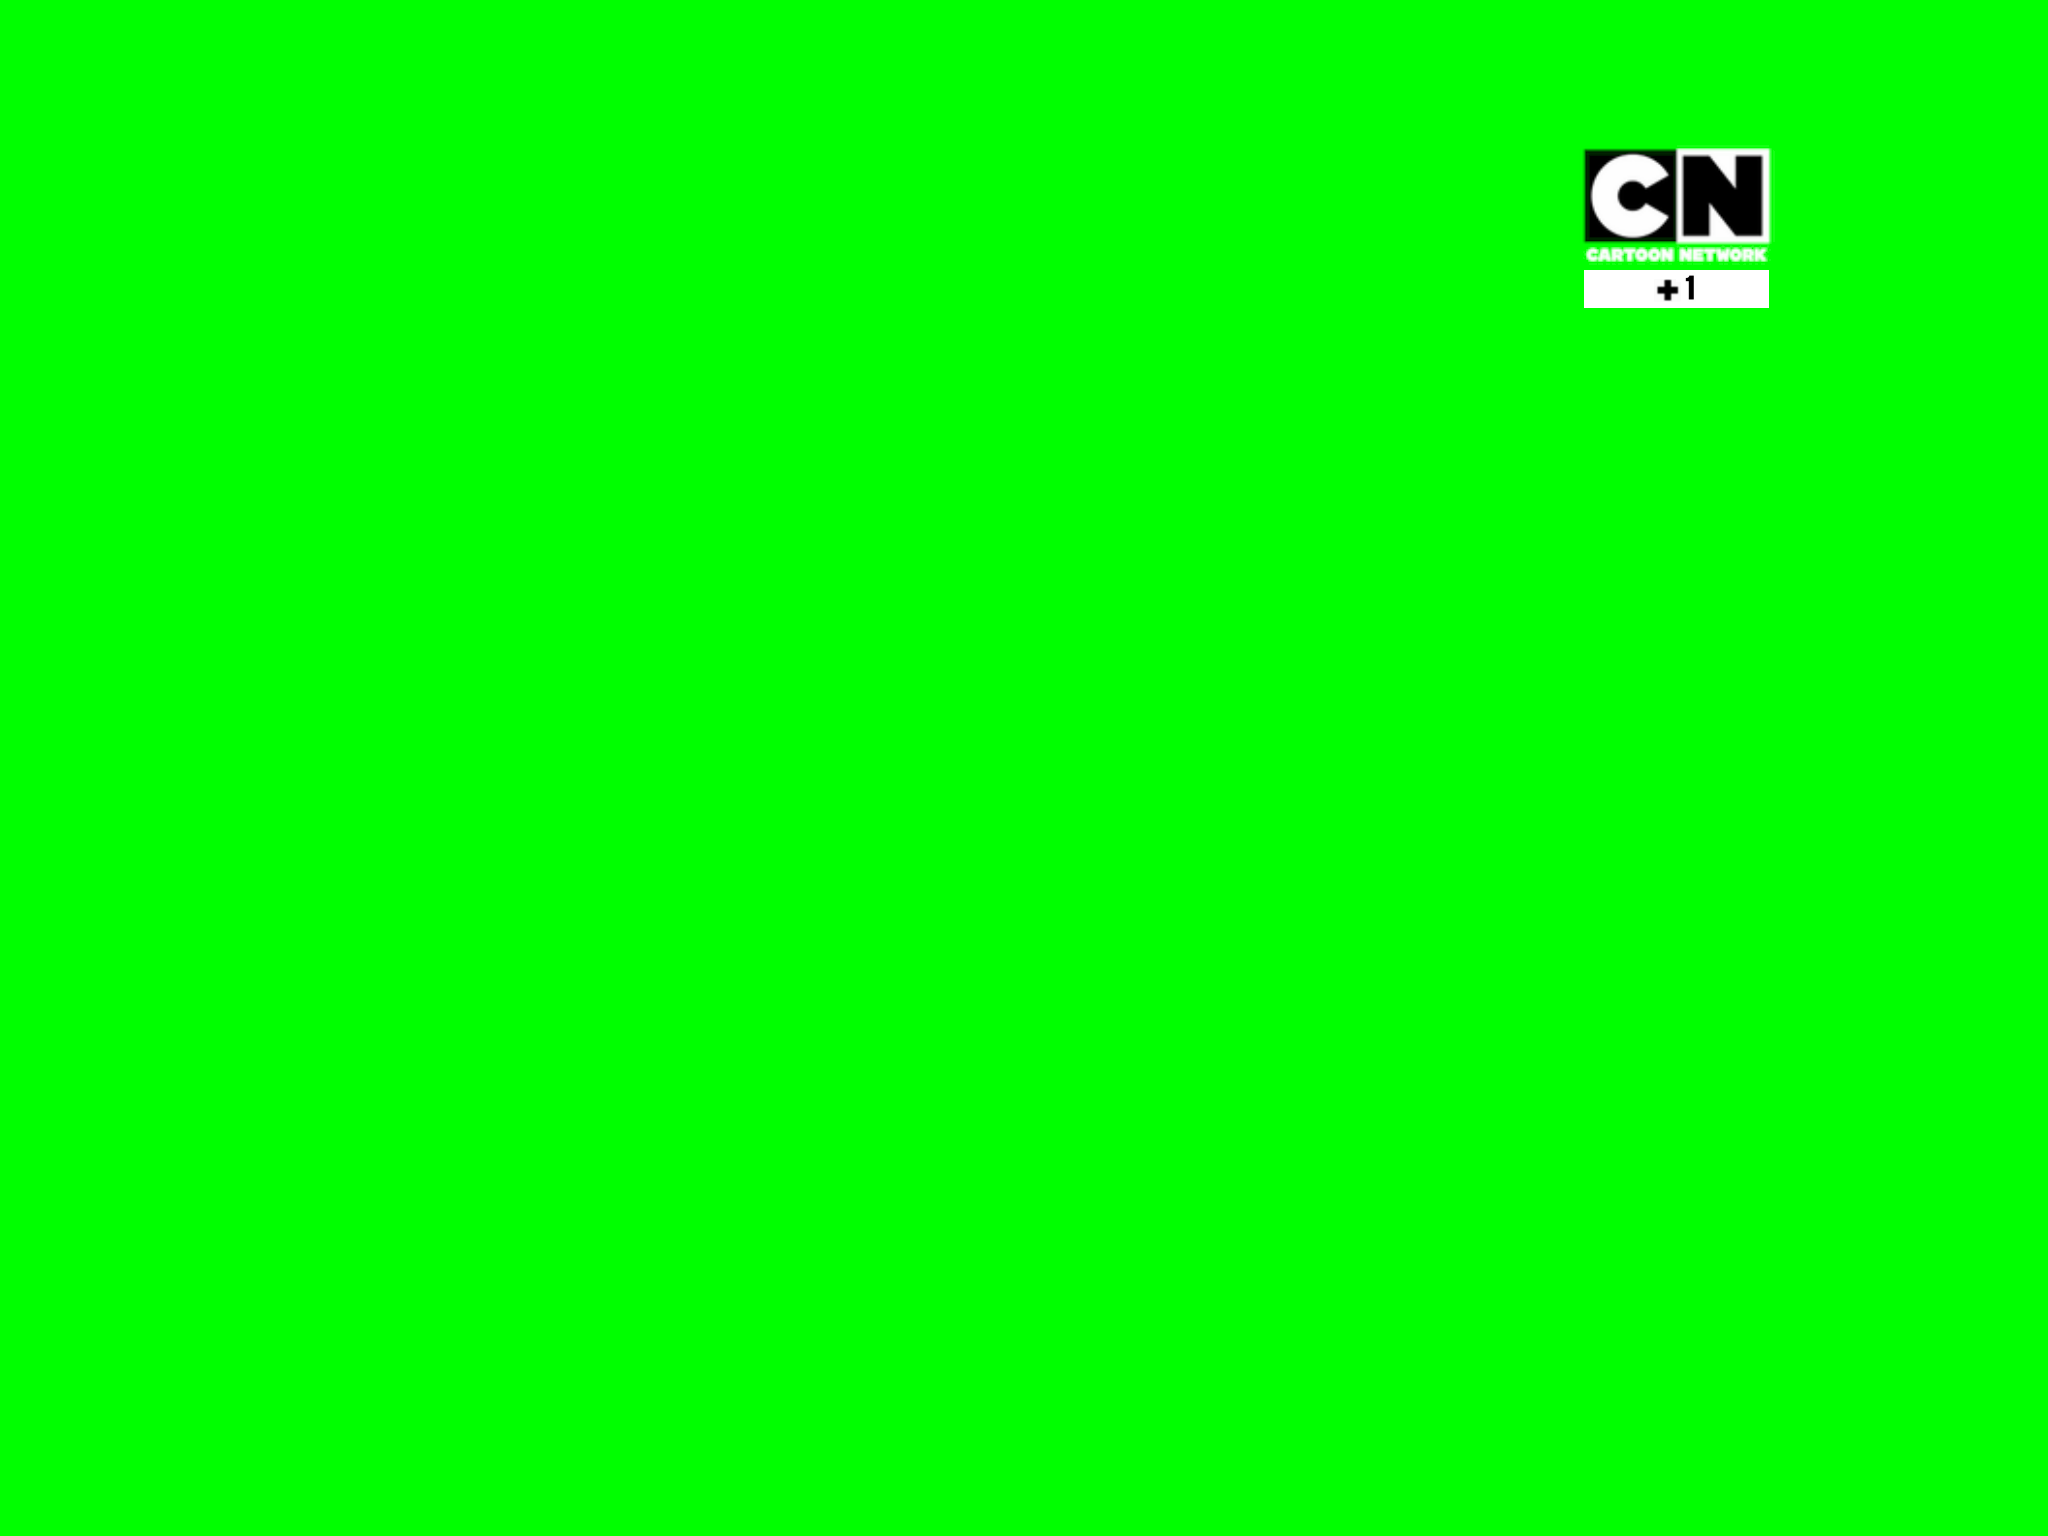 Cartoon Network UK screen bug (Check It) Plus 1 by PulseFewSpecials on  DeviantArt